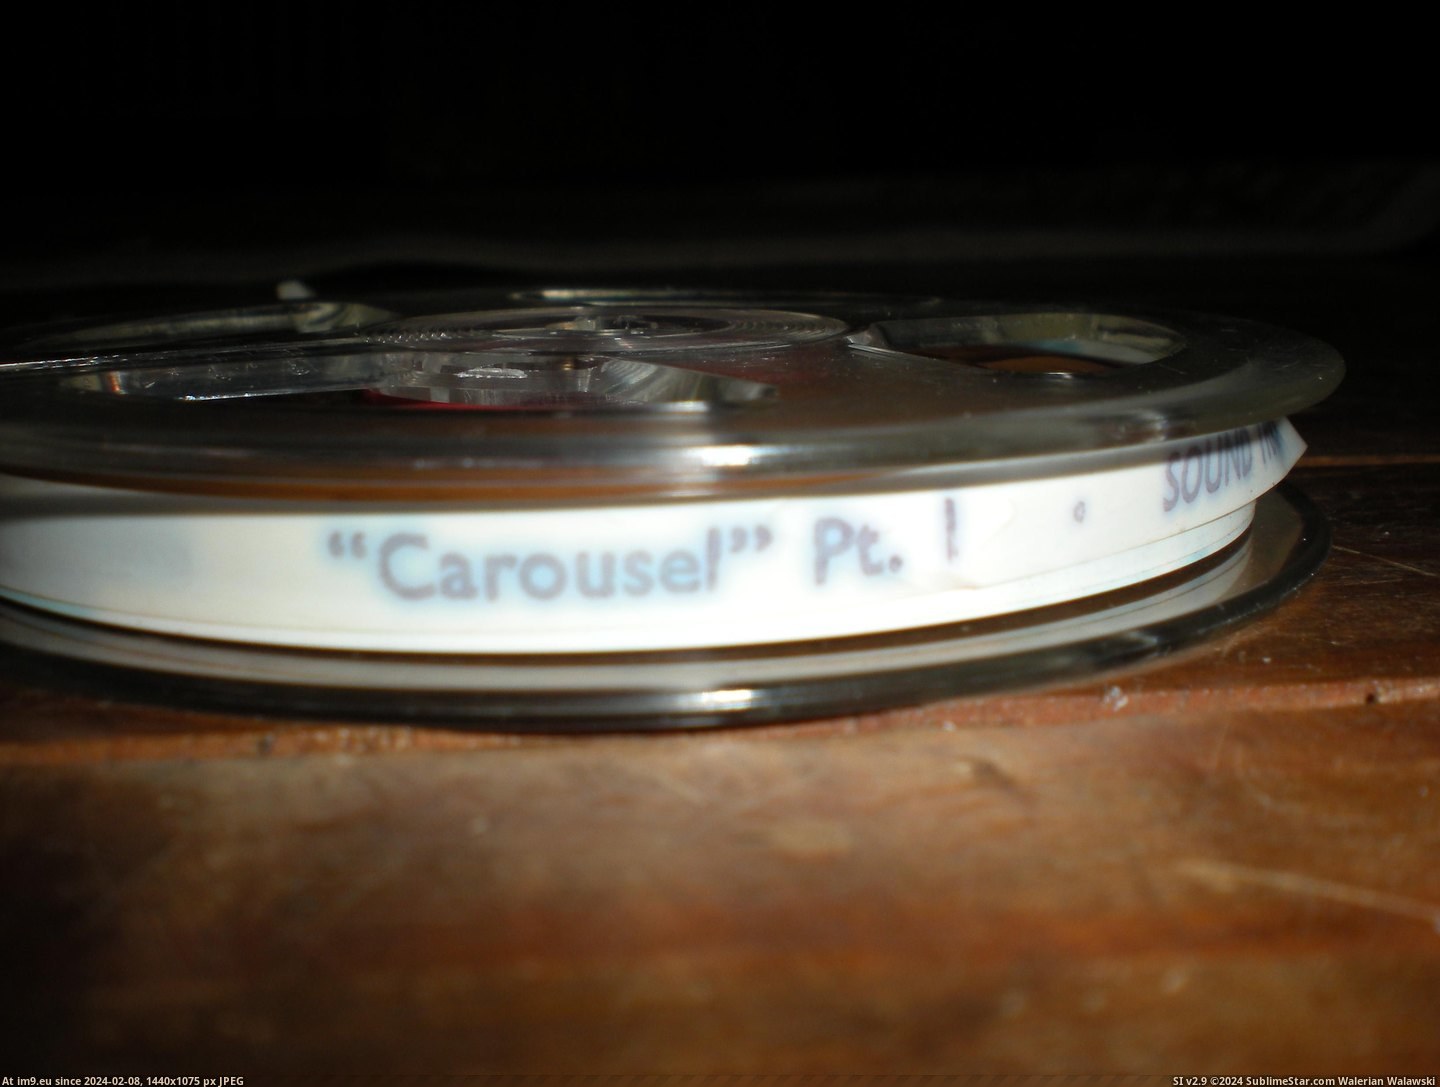  #Carousel  Carousel 4 Pic. (Изображение из альбом new 1))